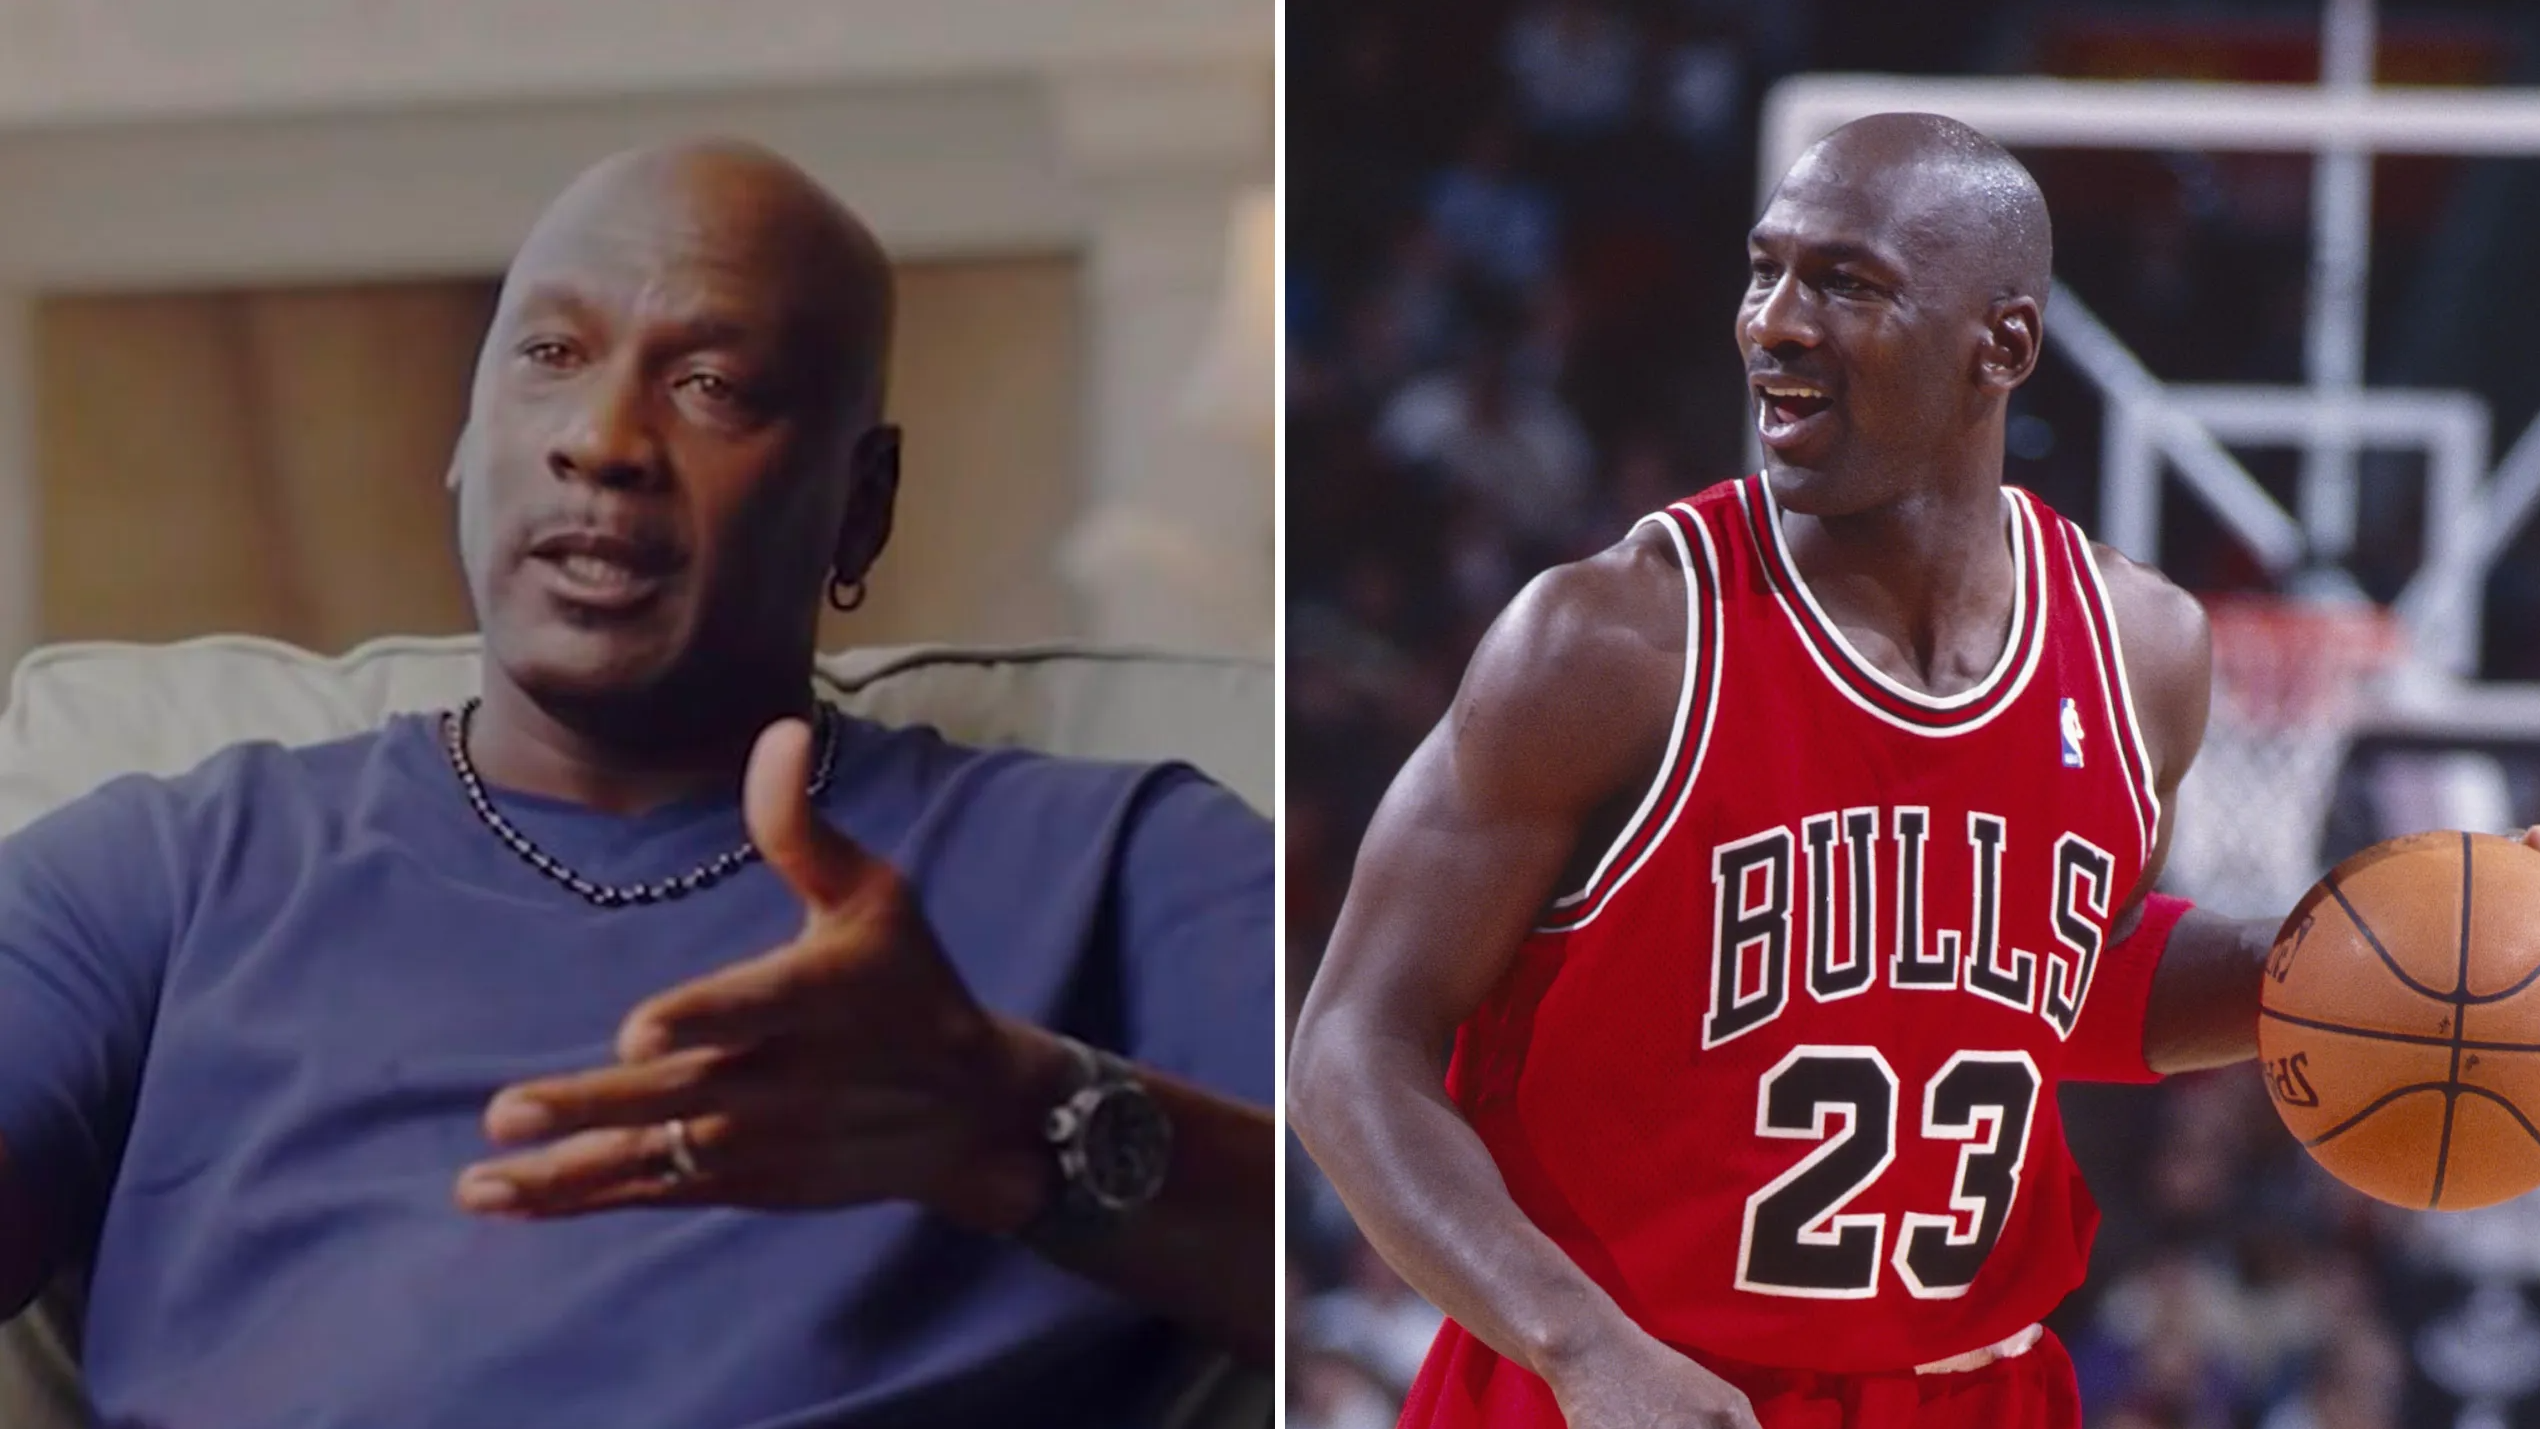 Air: Michael Jordan Was Shown in Original Script, Alex Convery Says – The  Hollywood Reporter